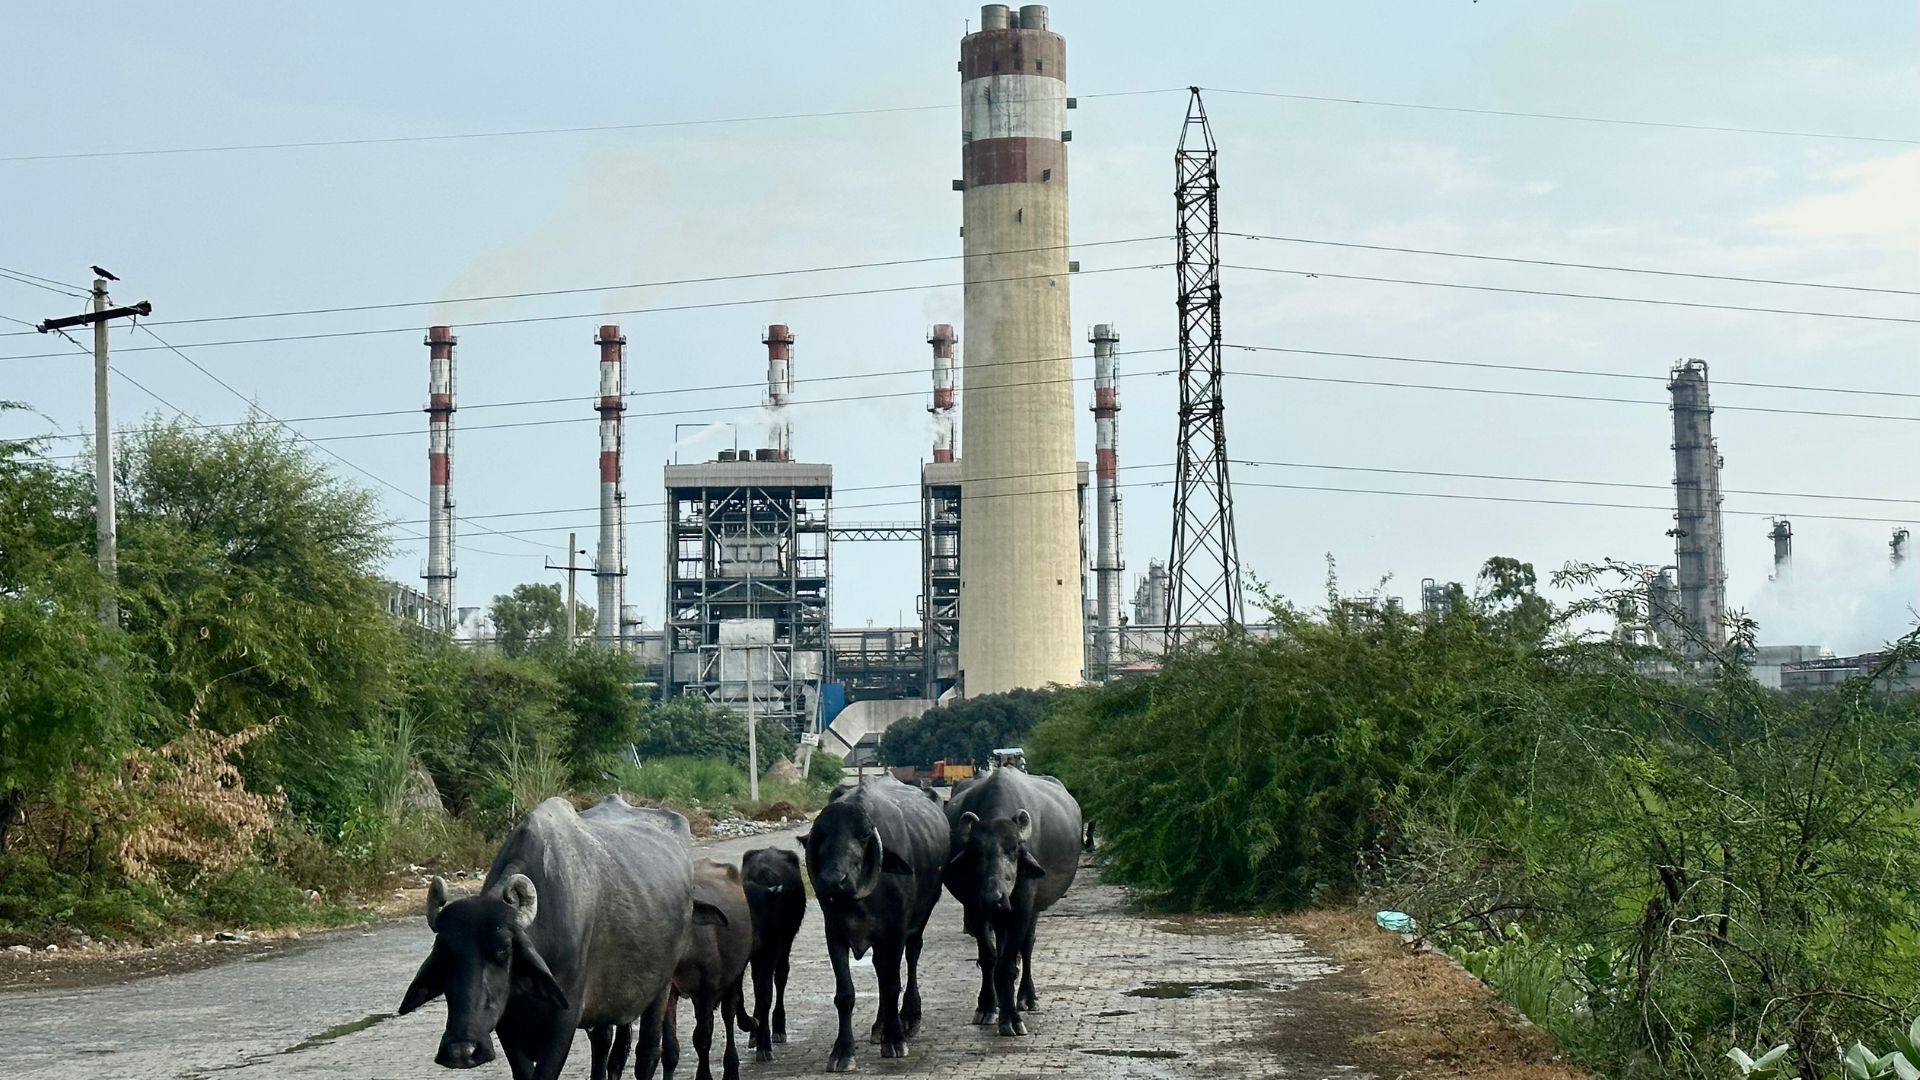 Panipat Refinery: Powering Health and Environmental Catastrophe